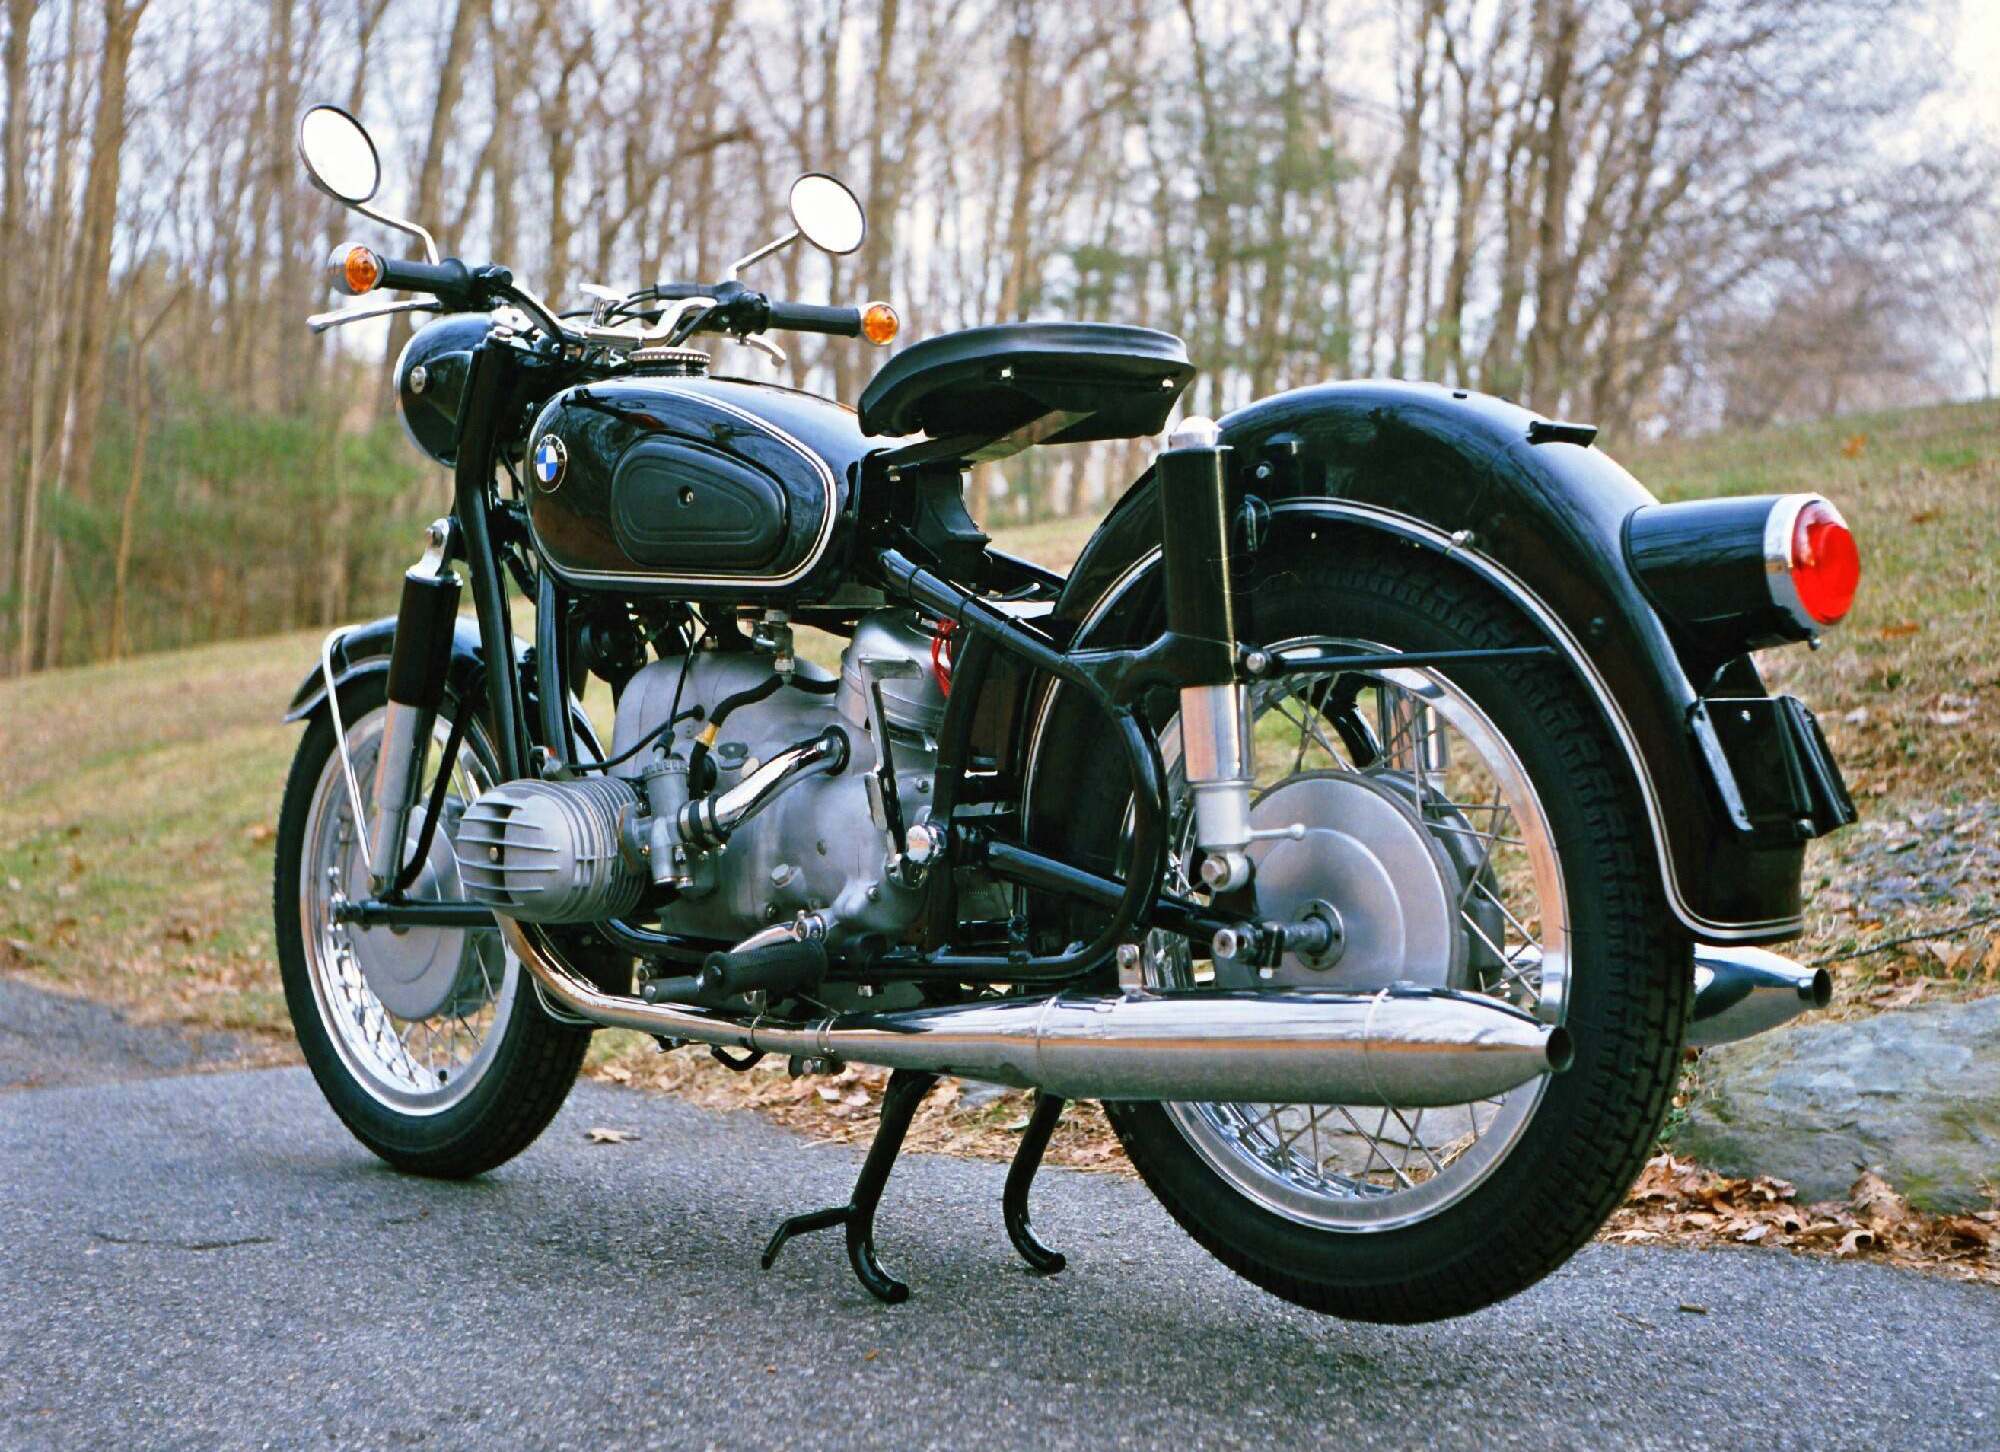 Scottie S Workshop Restores Vintage Bmw Motorcycles Cycle World